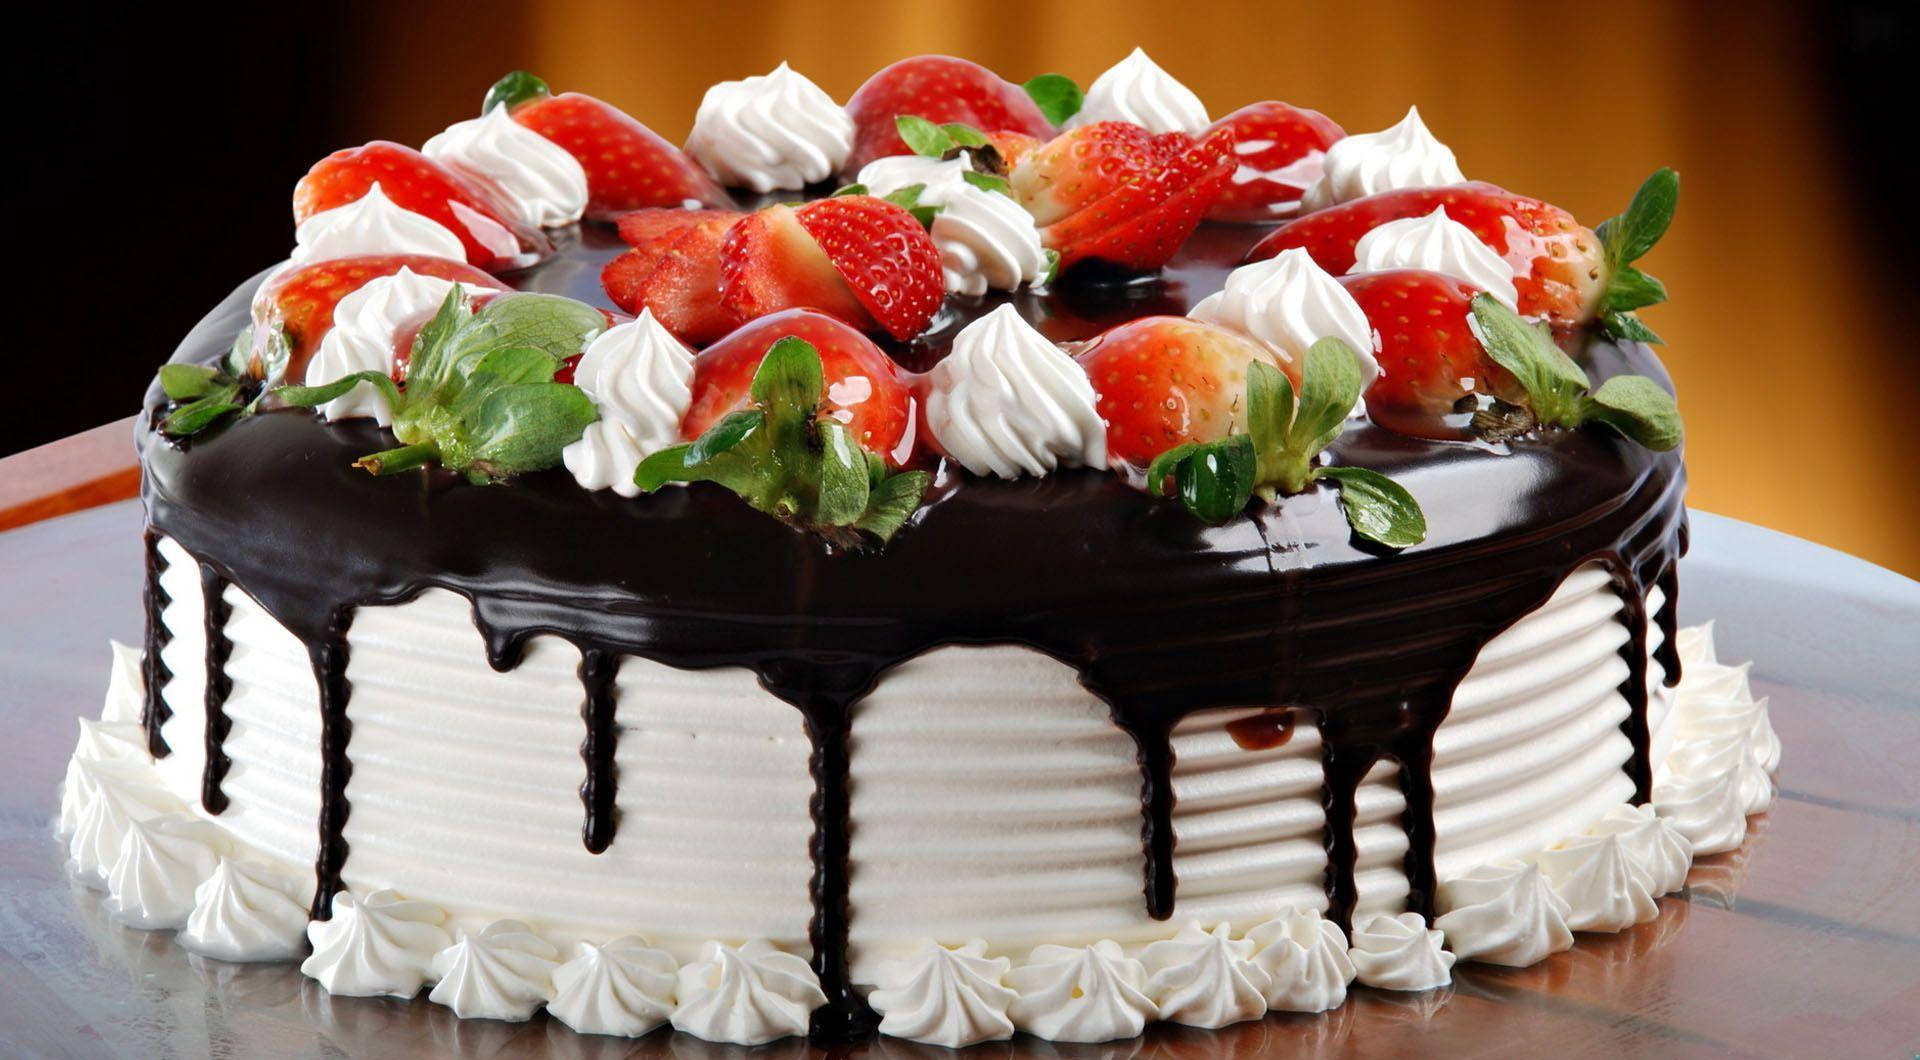 Birthday Cake With Chocolate And Strawberries Background